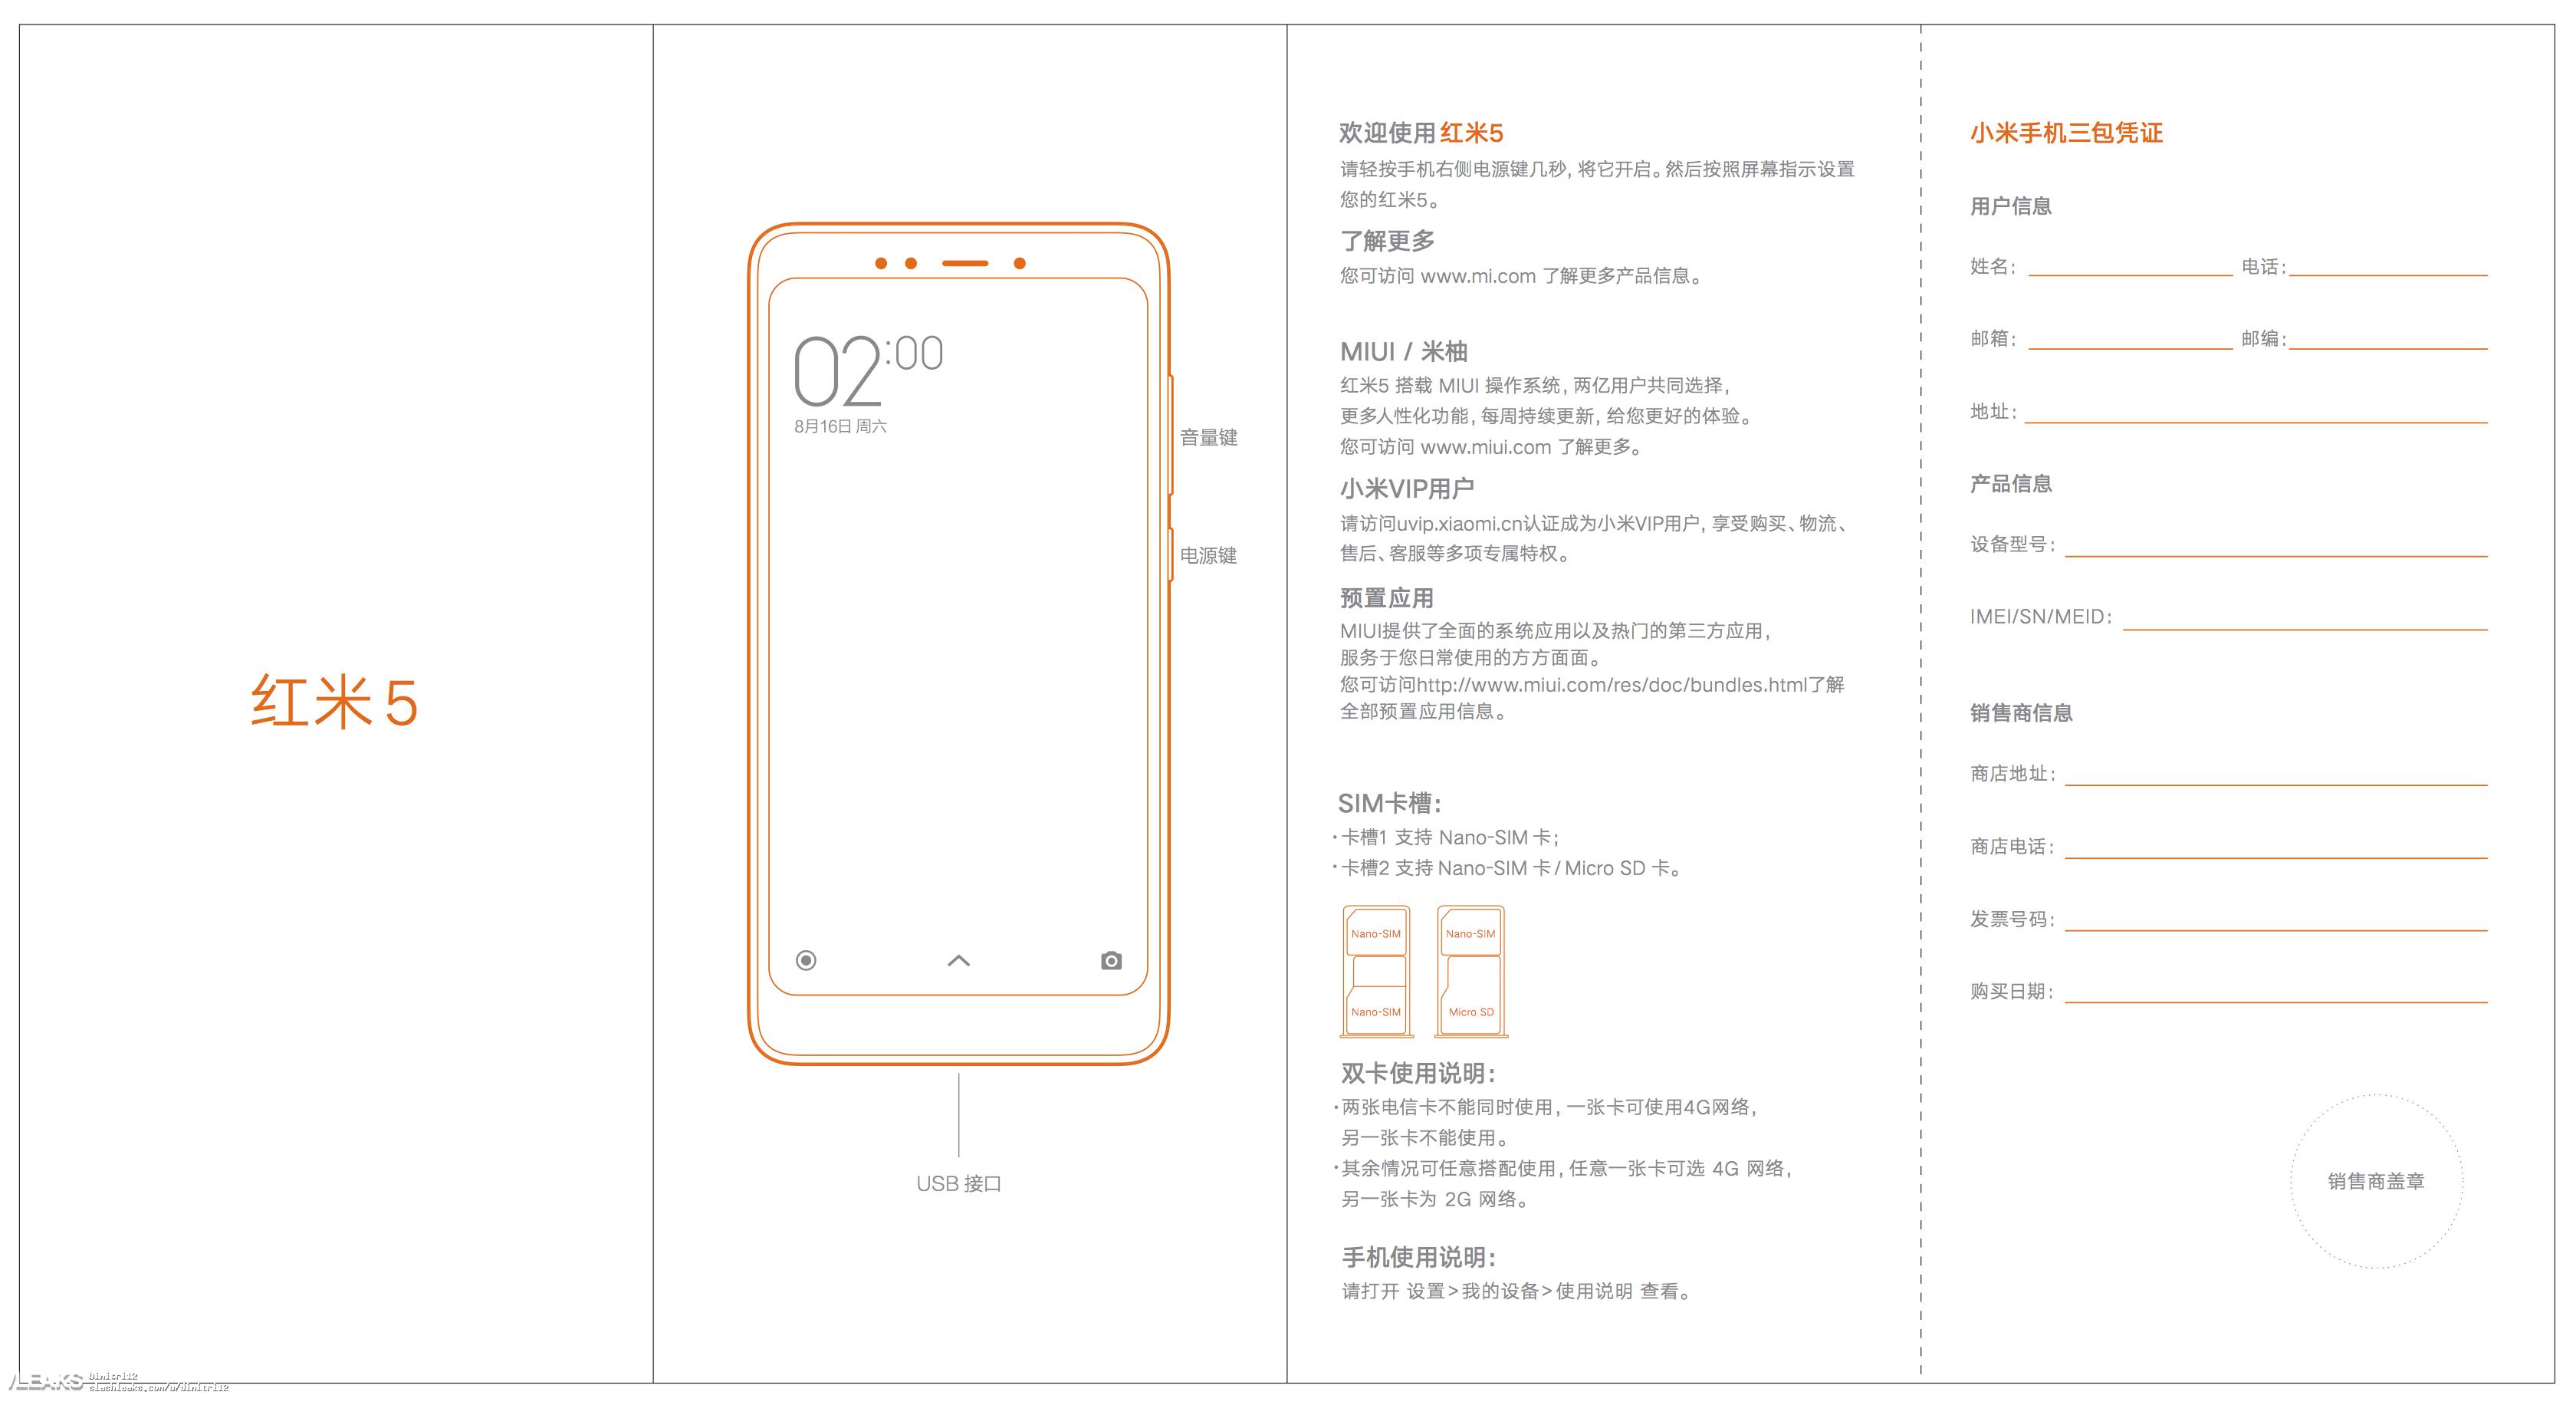 Xiaomi Redmi 5 Plus 3 Характеристики